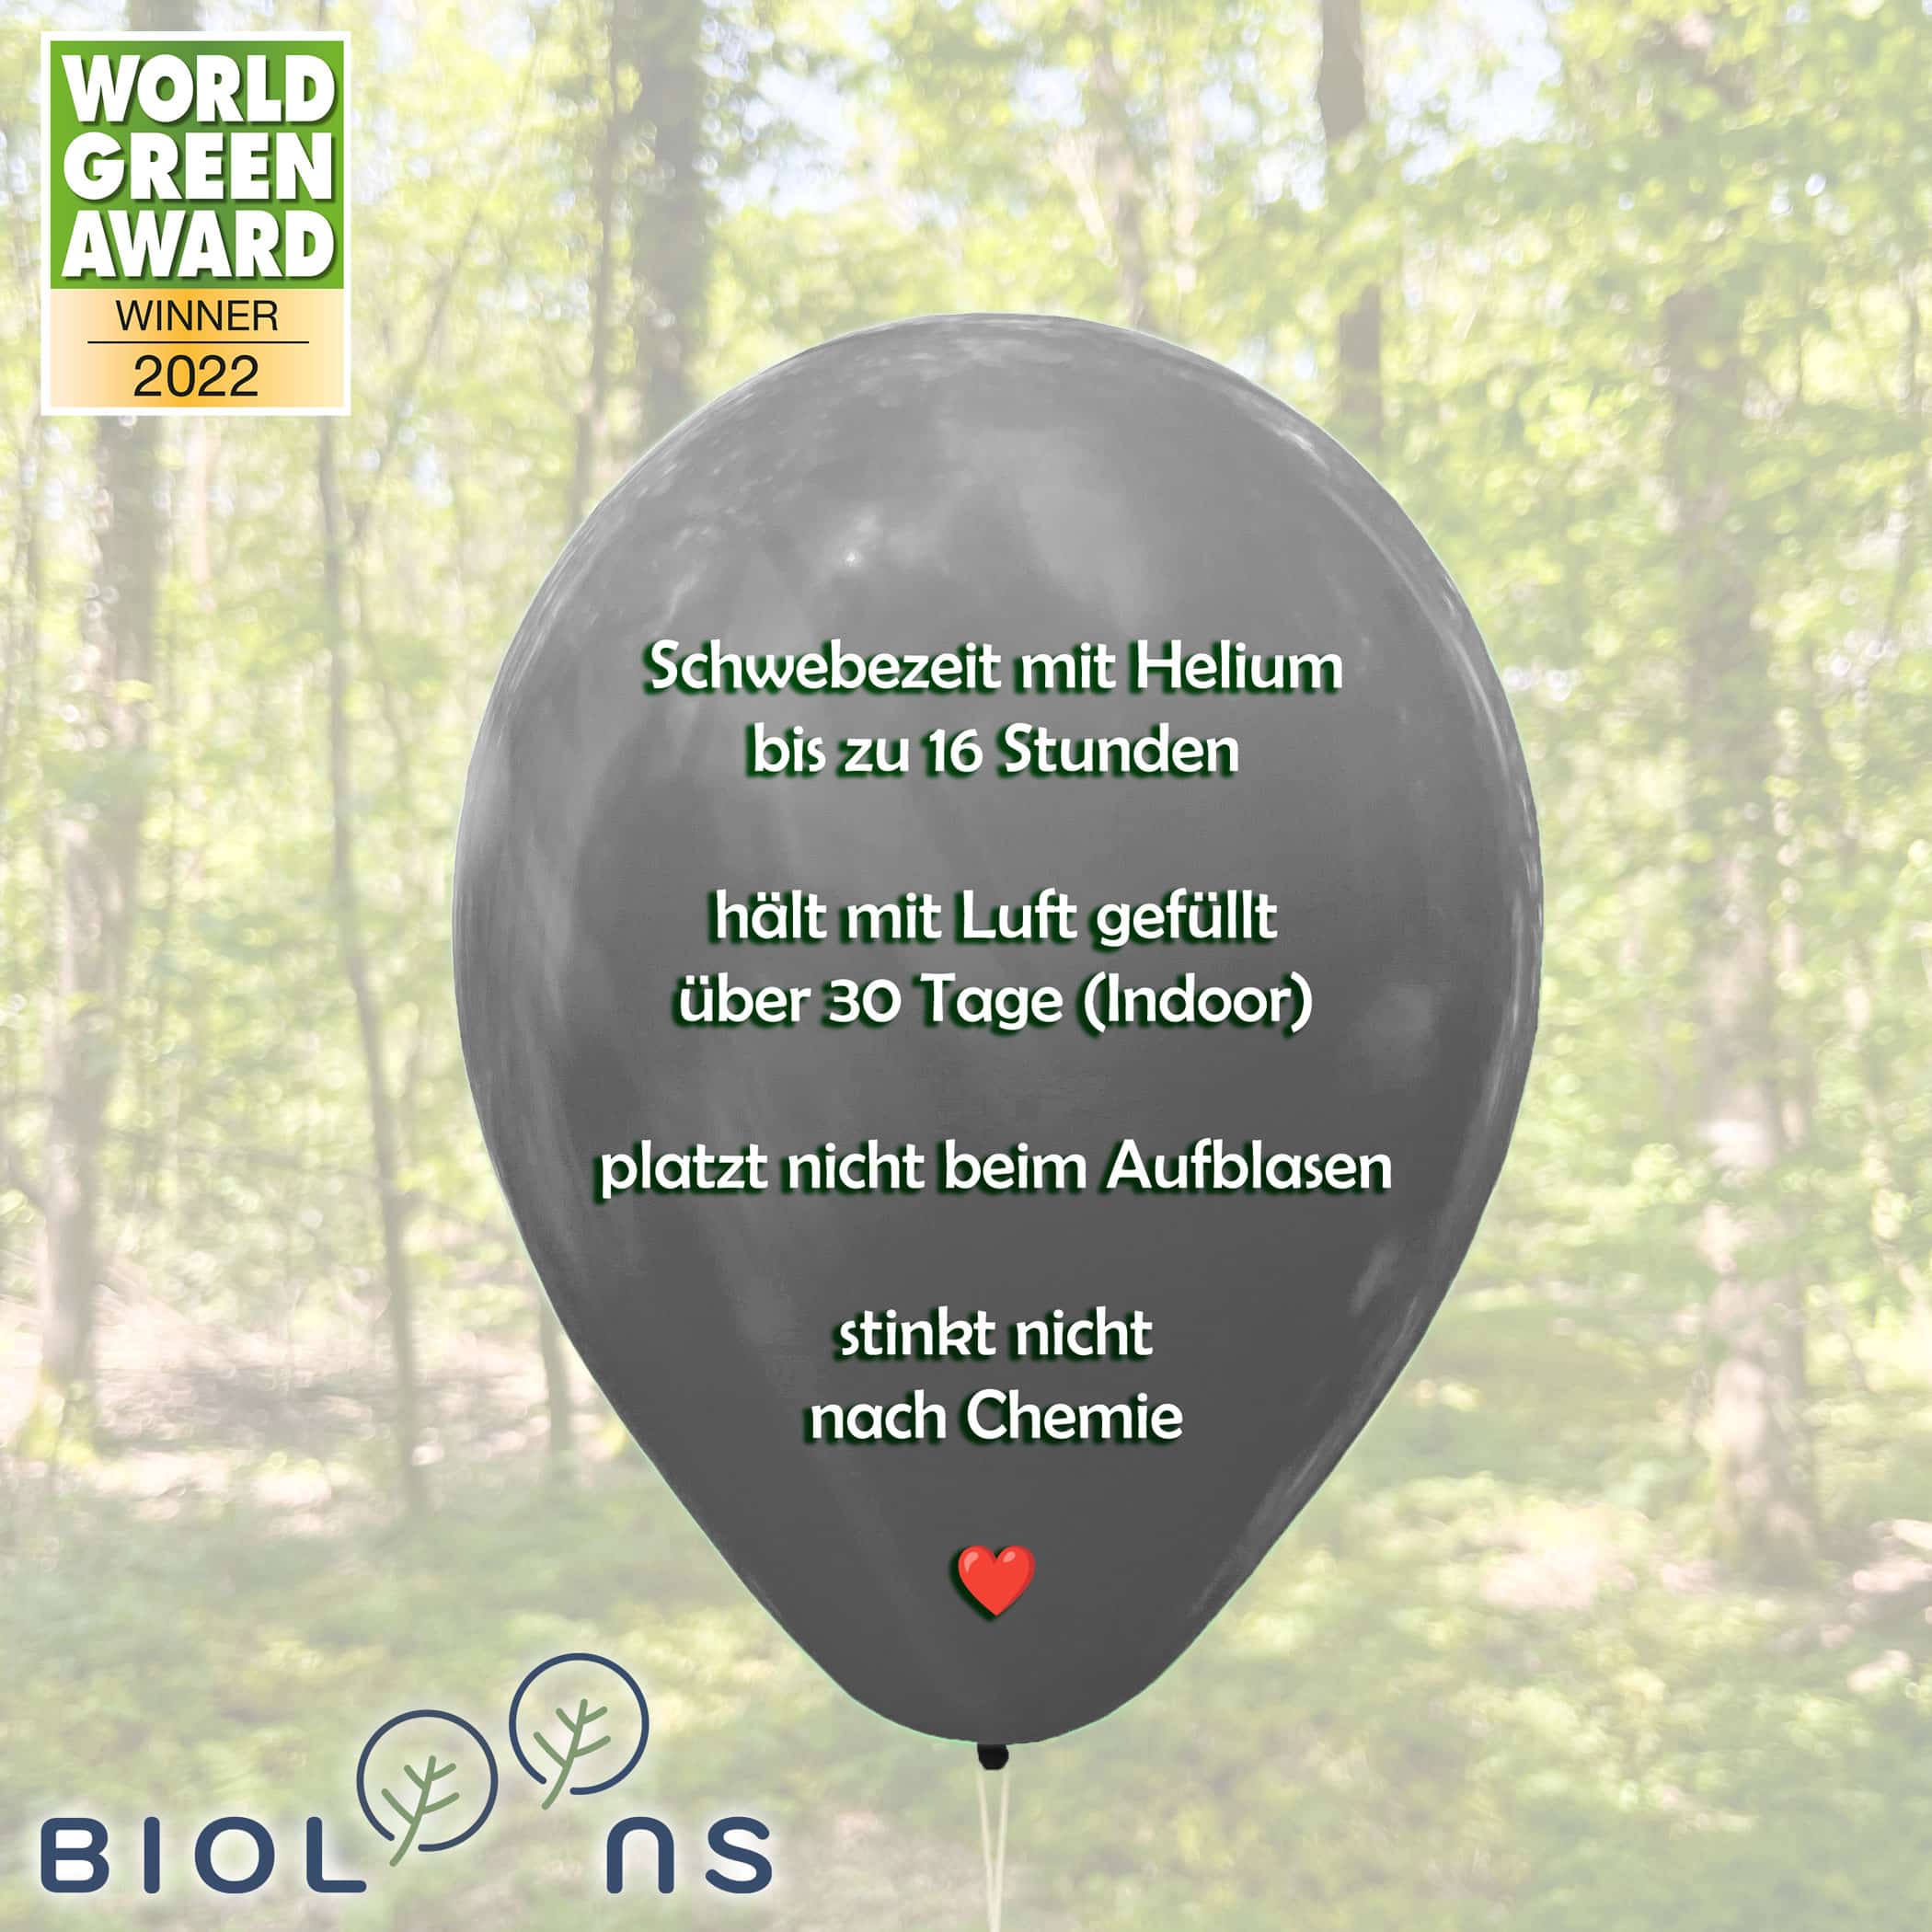 Bio Luftballon Bioloons® kristallklar mit schwarzem Graffiti, 30cm - 25 Stück